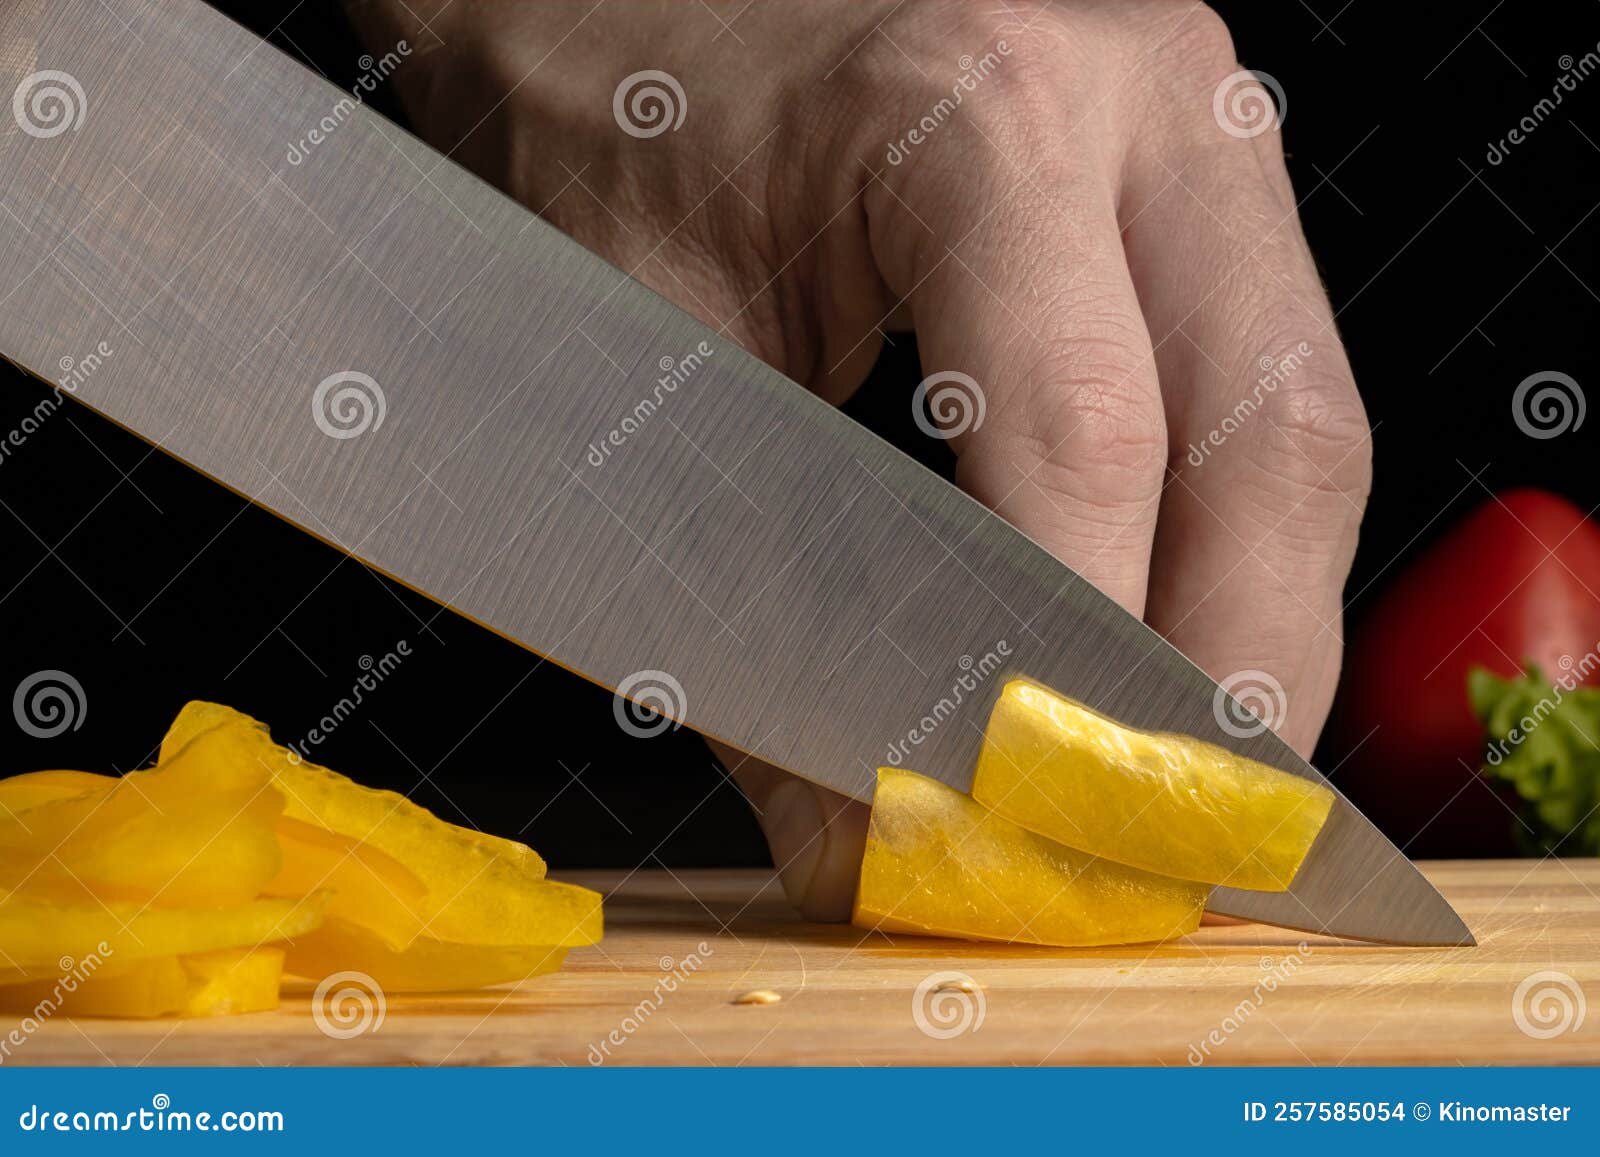 https://thumbs.dreamstime.com/z/male-hand-slicing-yellow-bell-pepper-sharp-metal-knife-cook-grinds-pulp-bell-pepper-wooden-cutting-board-yellow-pepper-257585054.jpg